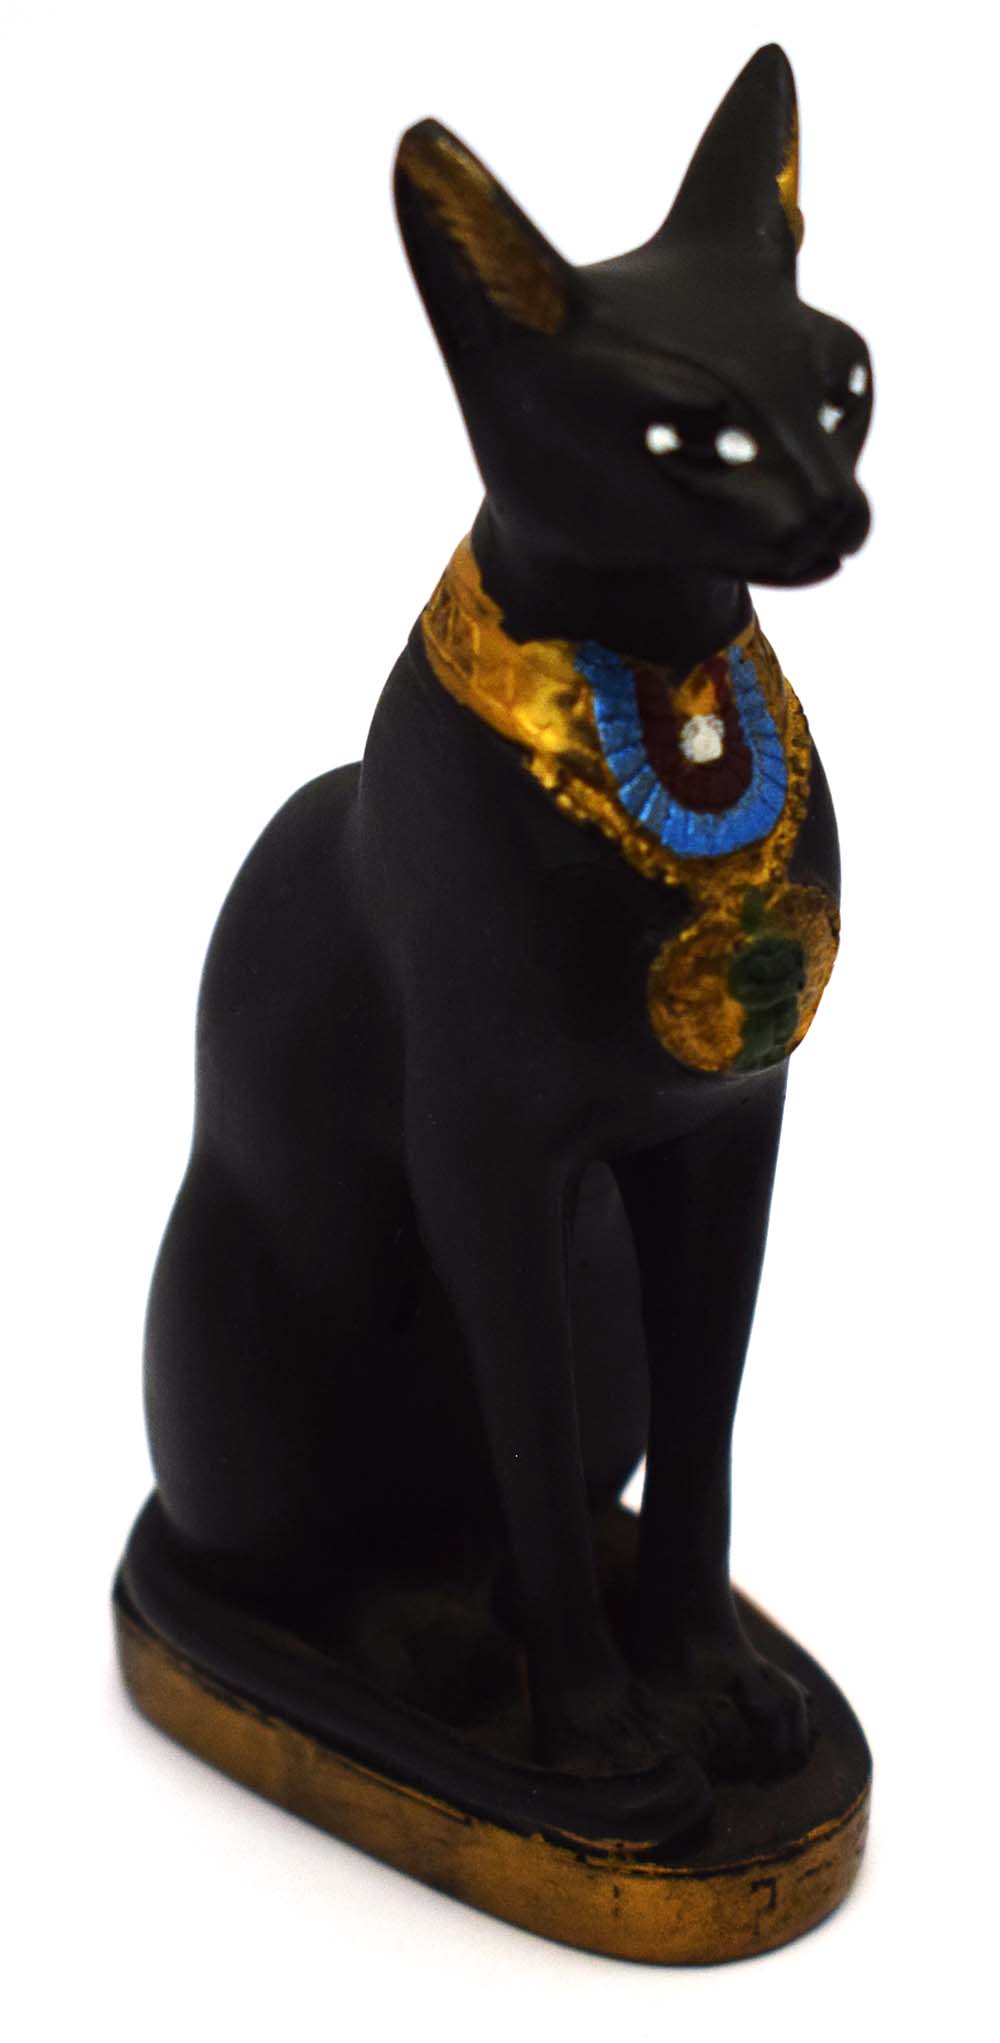 immatgar pharaonic Egyptian Cat Bastet Statue Egyptian souvenirs gifts - Inspired Gift from Egypt ( Black - 14 CM )